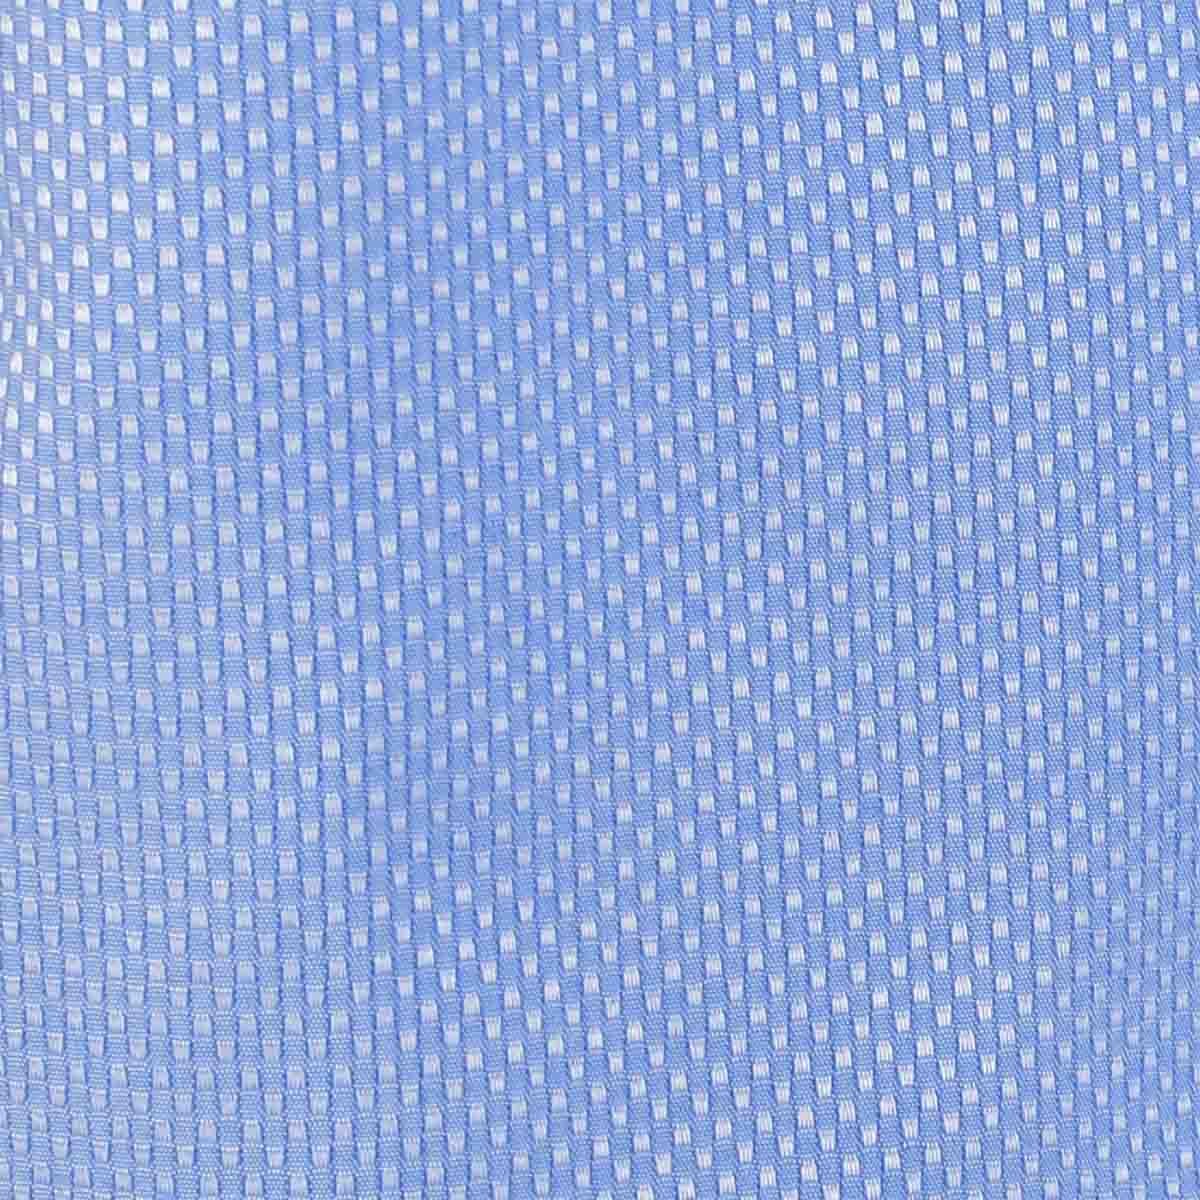 Camisa de Vestir Slim Fit Color Azul Nina Ricci para Caballero